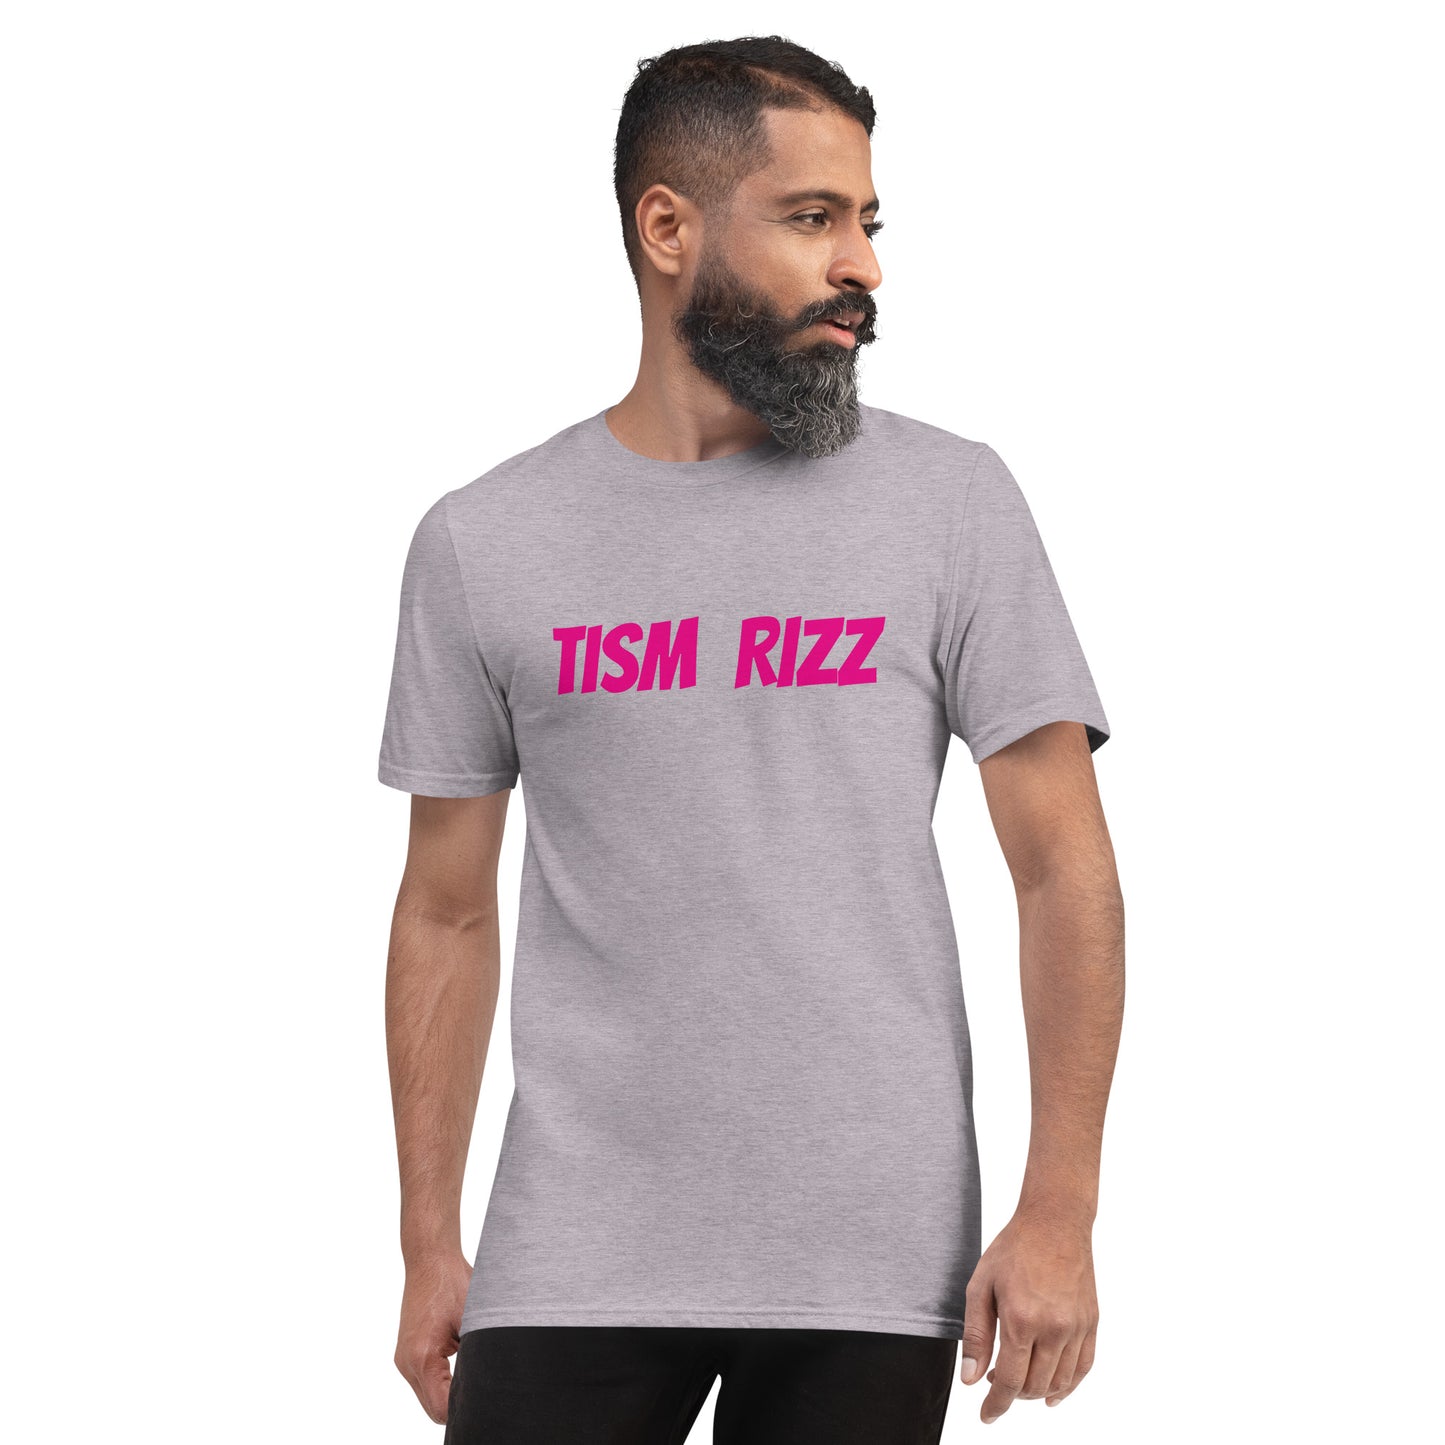 Tism Rizz - Short-Sleeve T-Shirt